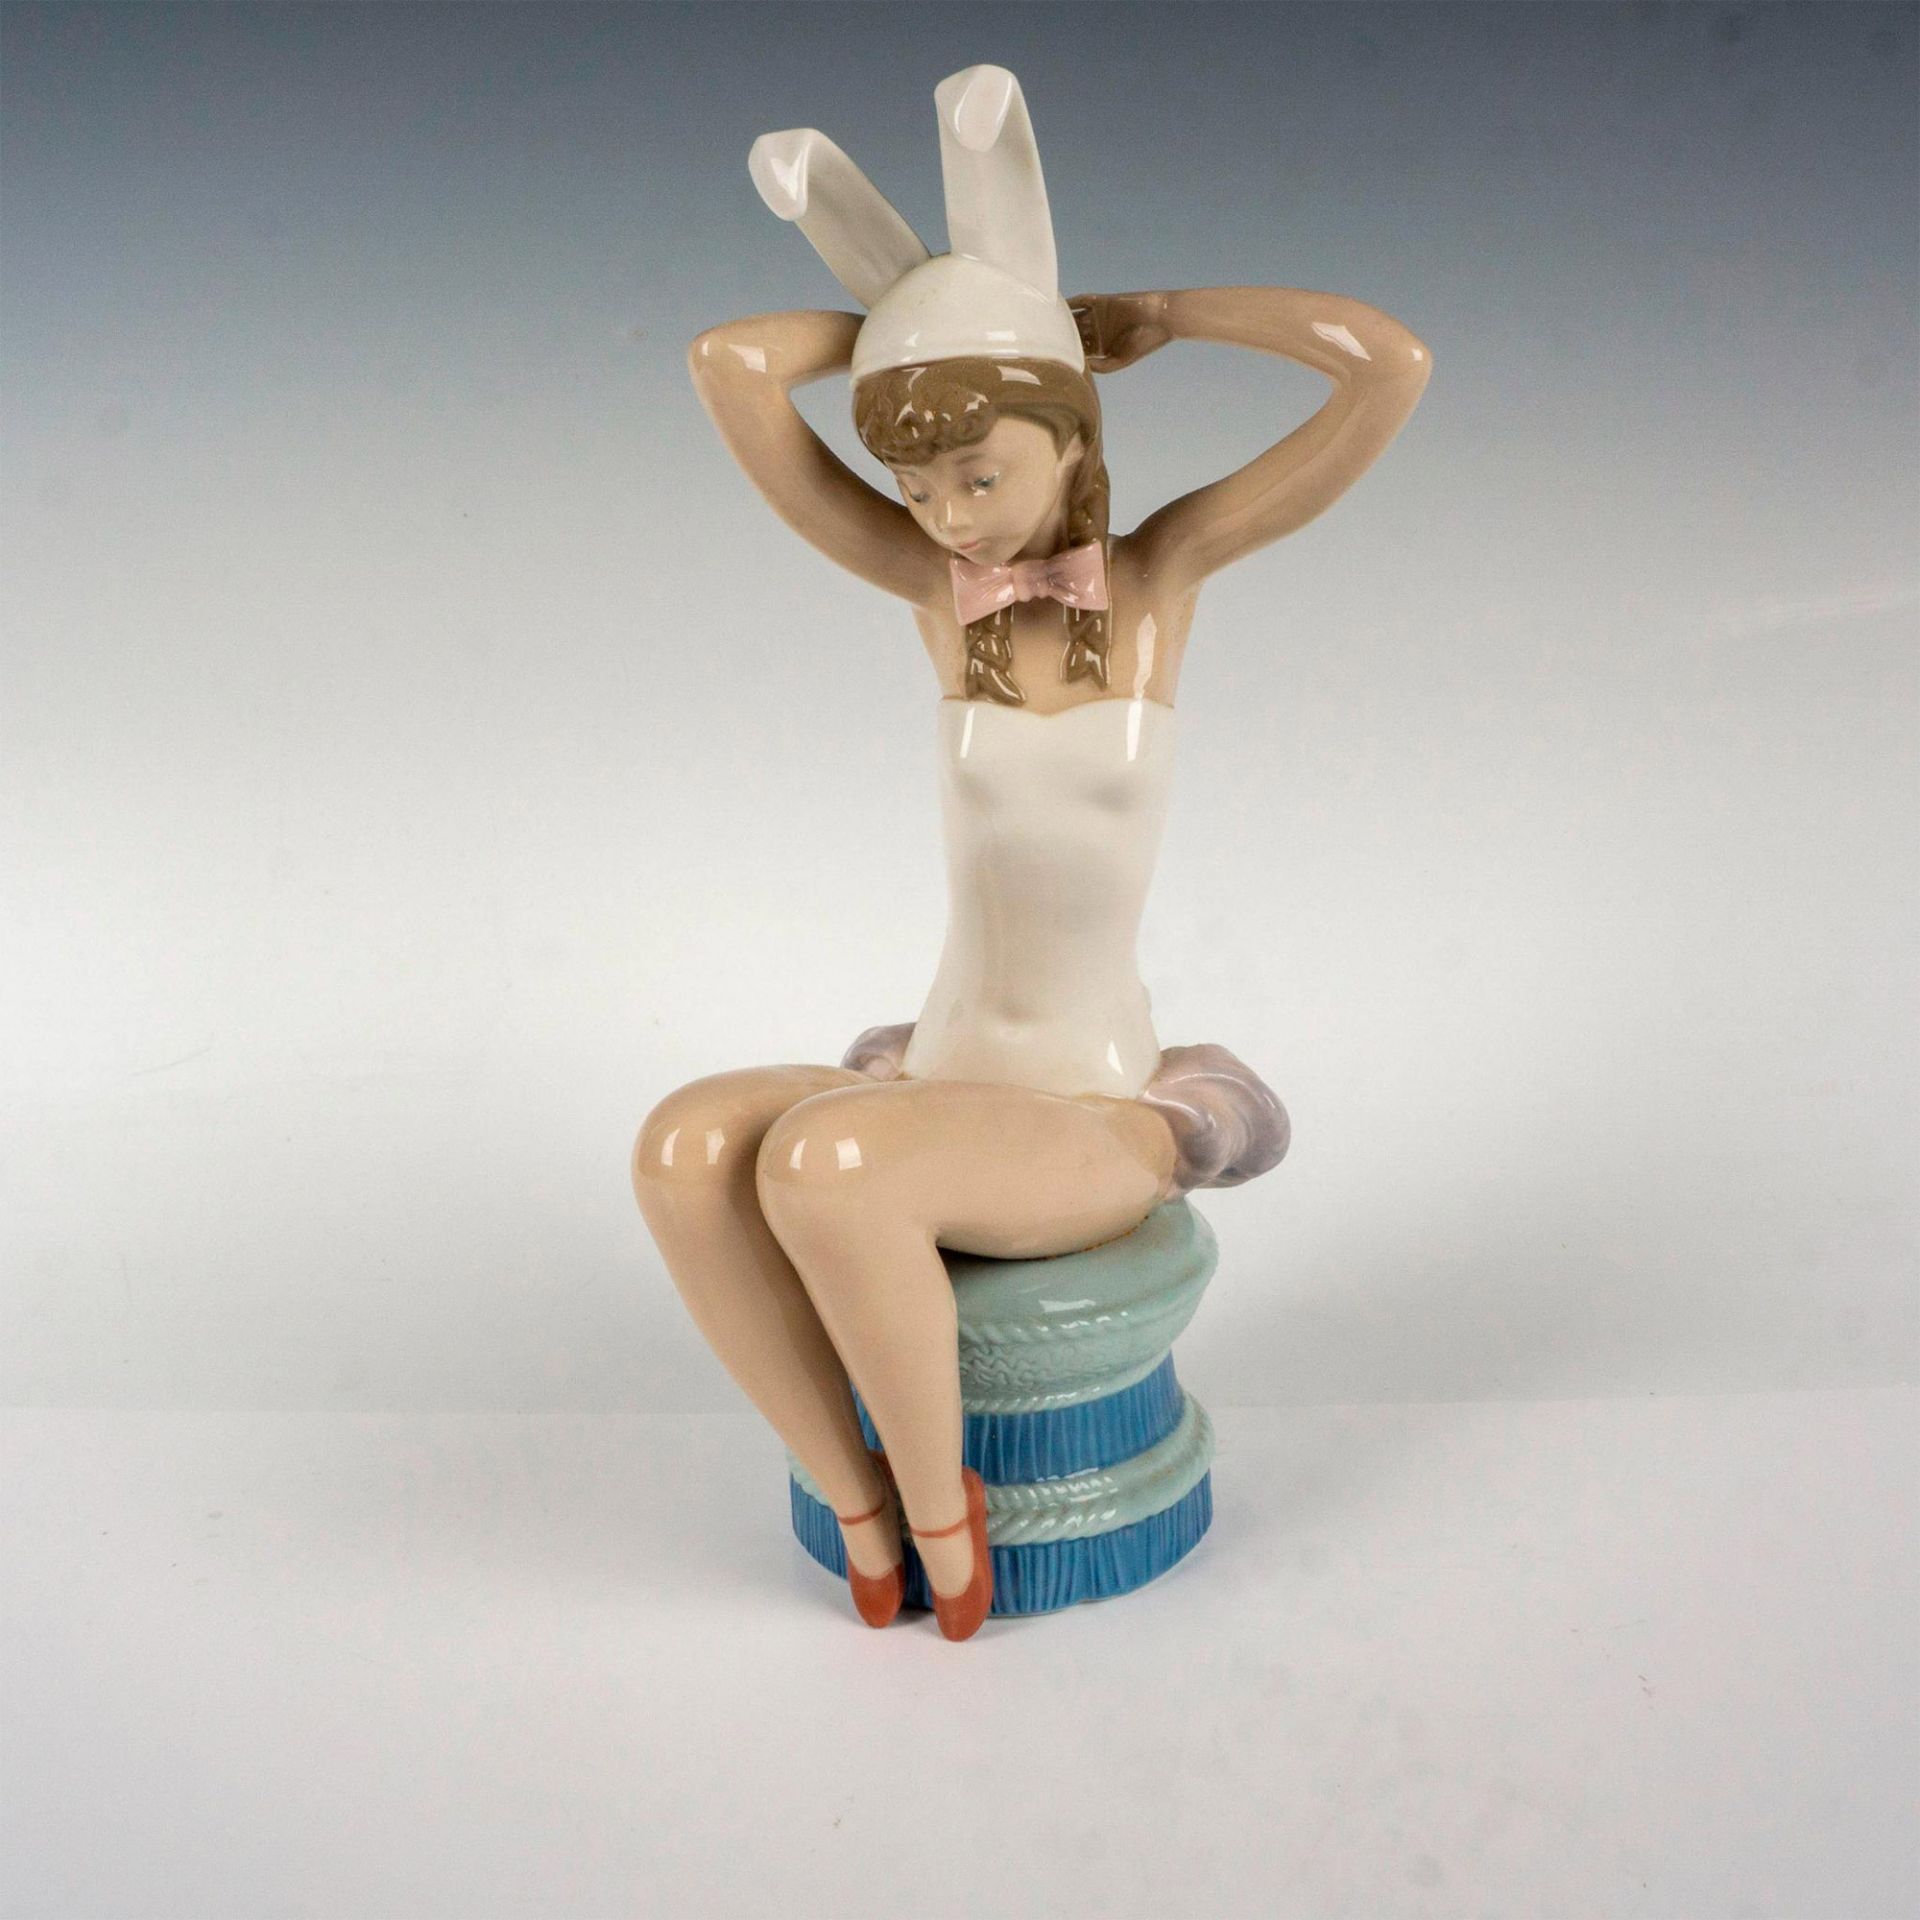 Bunny 1005163 - Lladro Porcelain Figurine